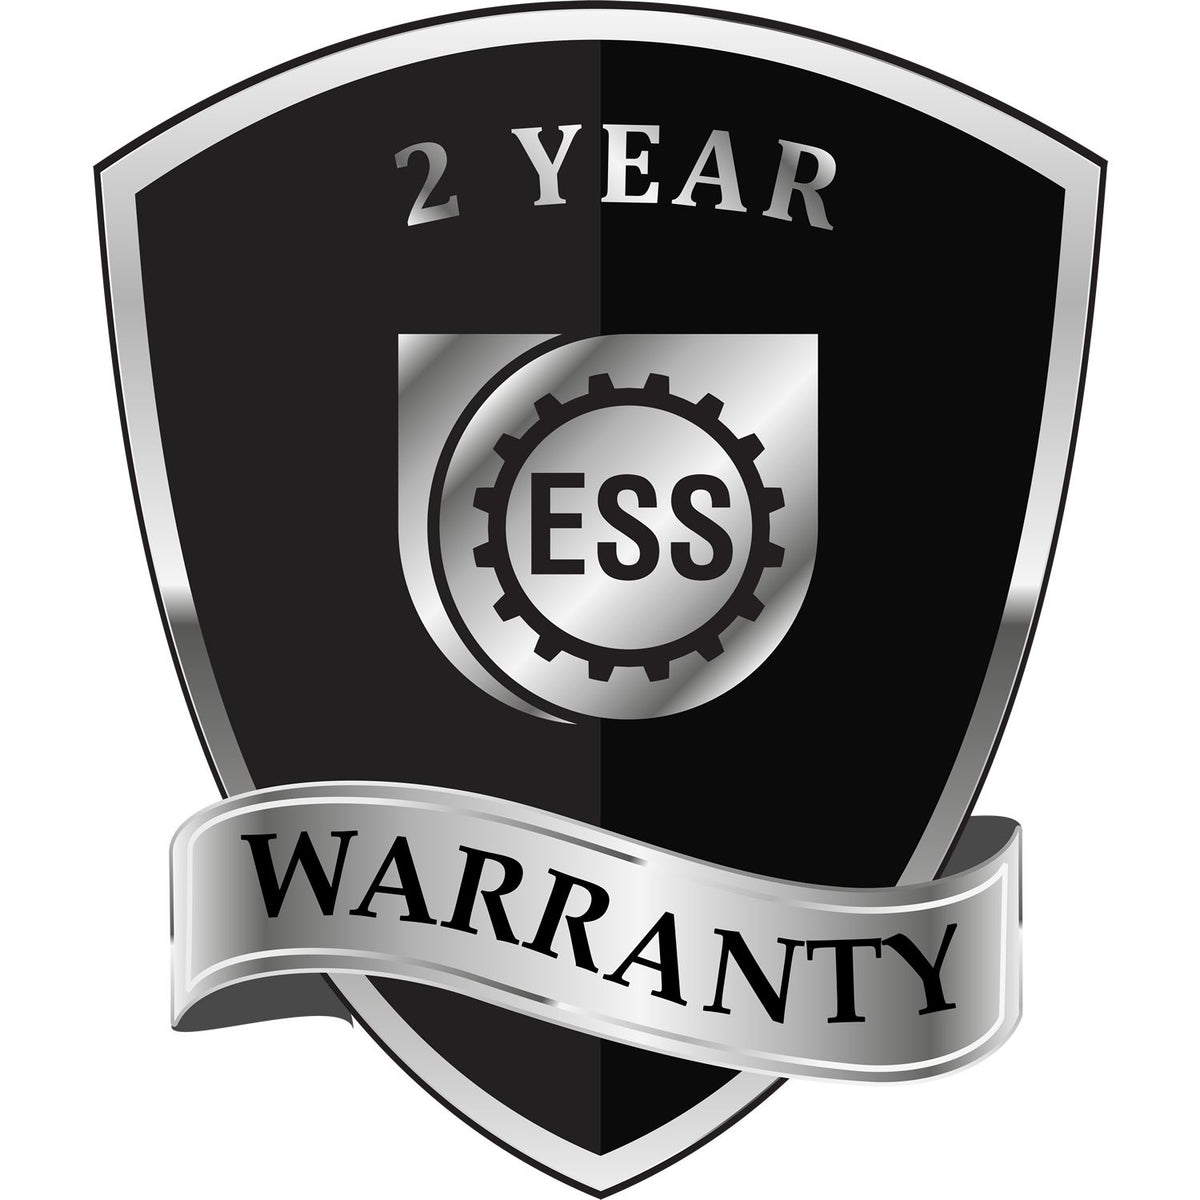 A black and silver badge or emblem showing warranty information for the Gift Utah Landscape Architect Seal